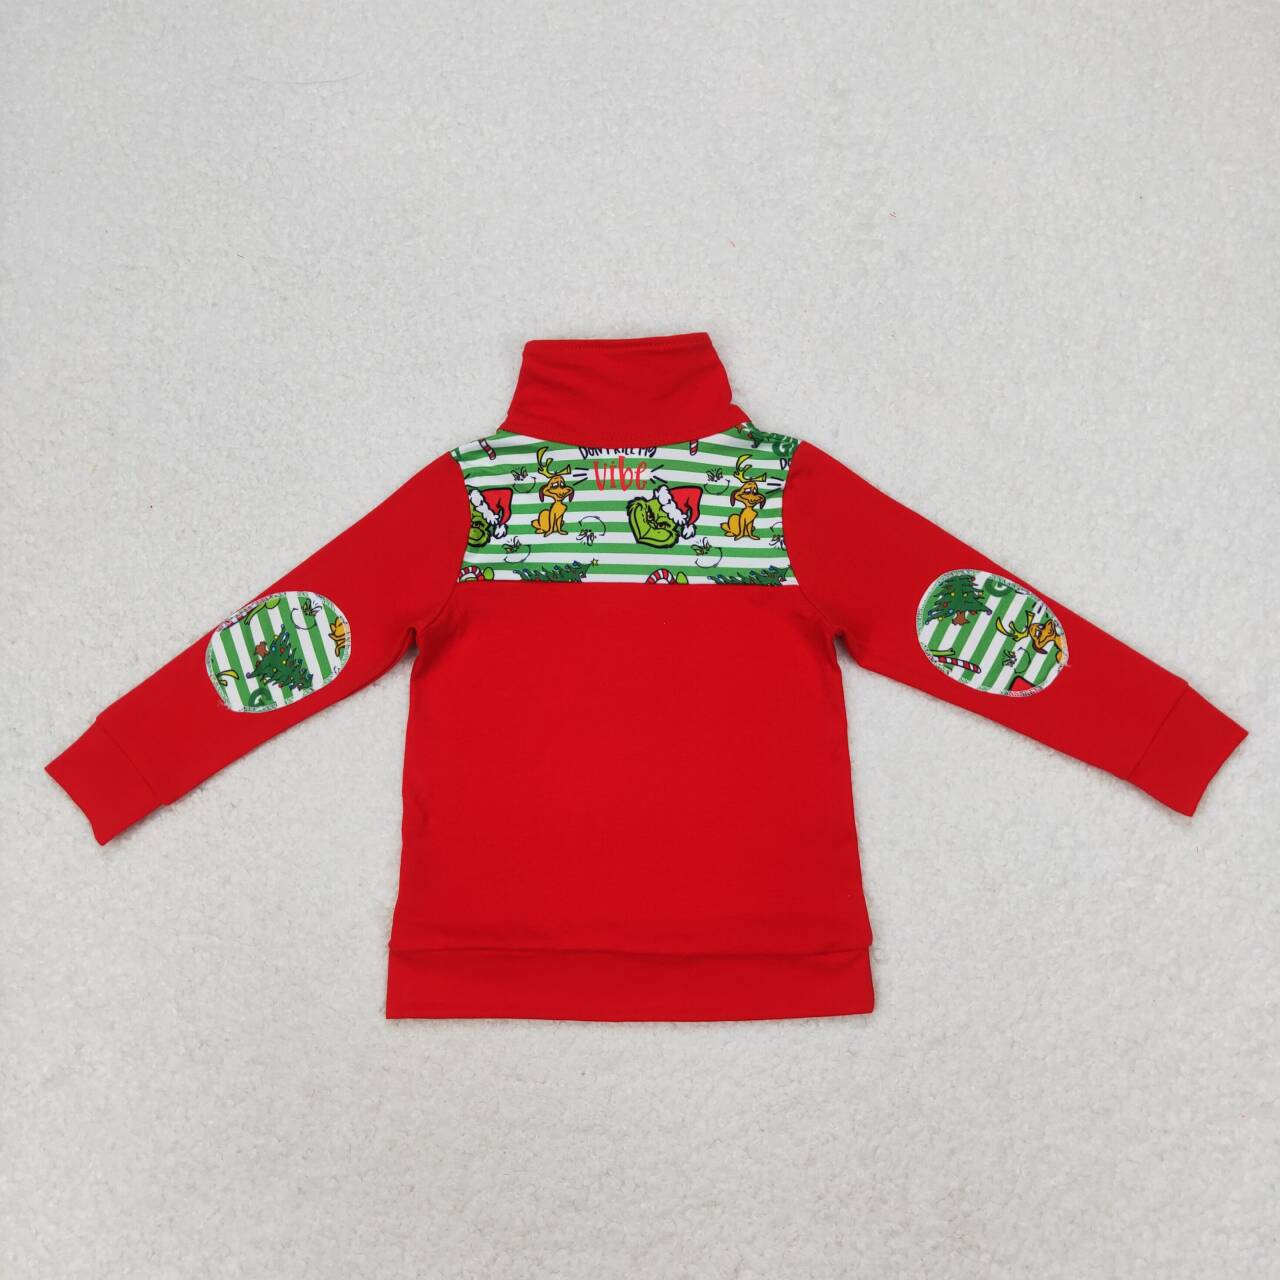 BT0726 Green Frog Vibe Print Boys Christmas Pullover Zipper Tee Shirts Top